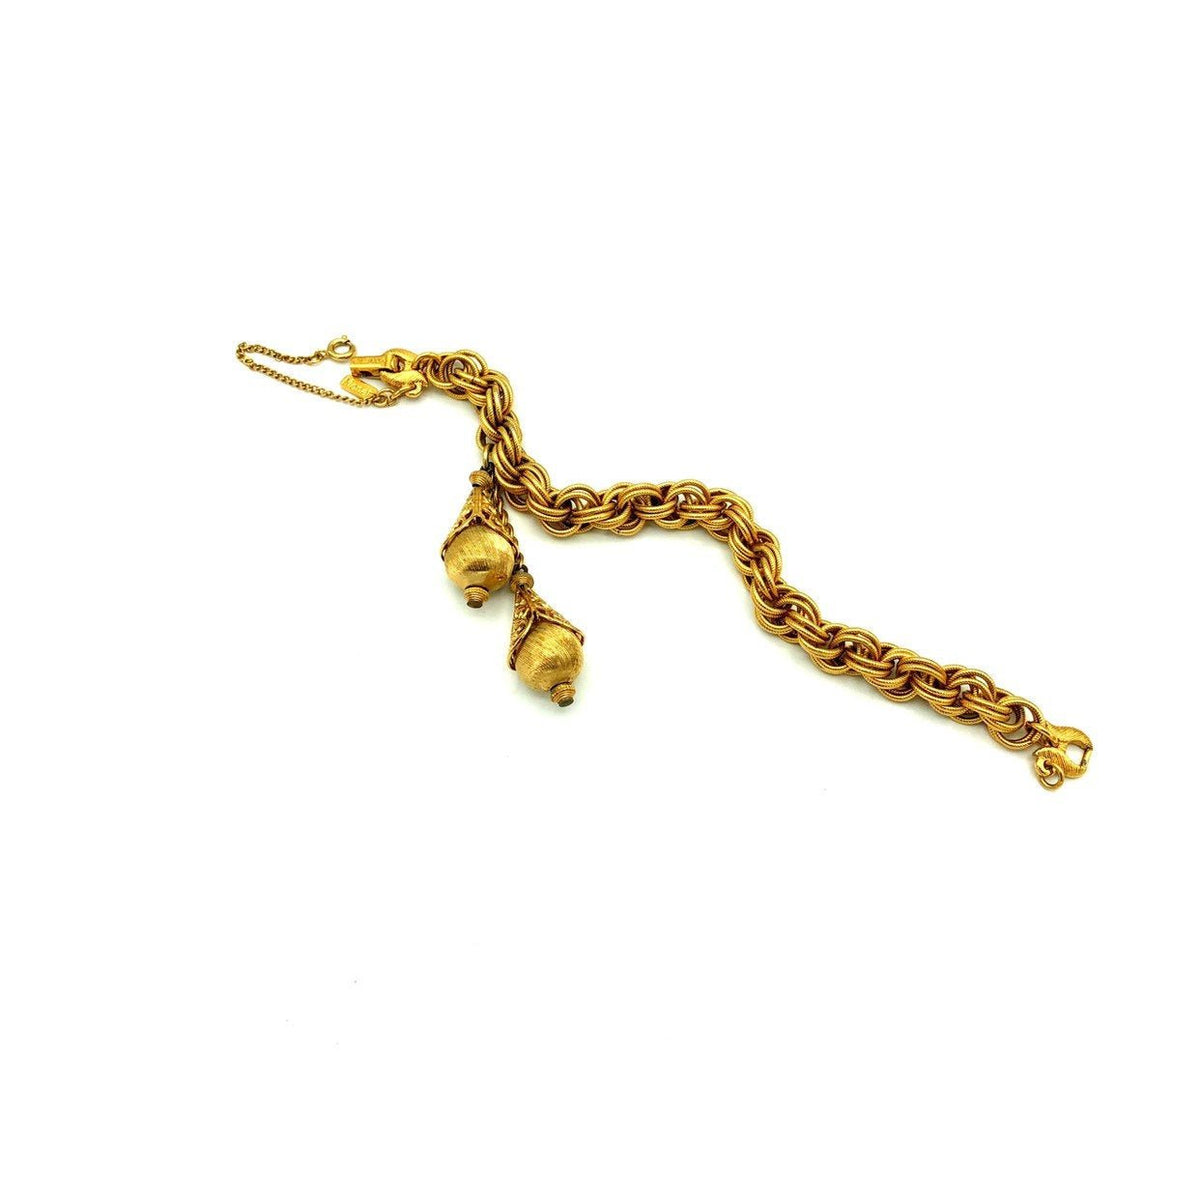 Vintage Monet Gold Chain Slide Stacking Bracelet - 24 Wishes Vintage Jewelry